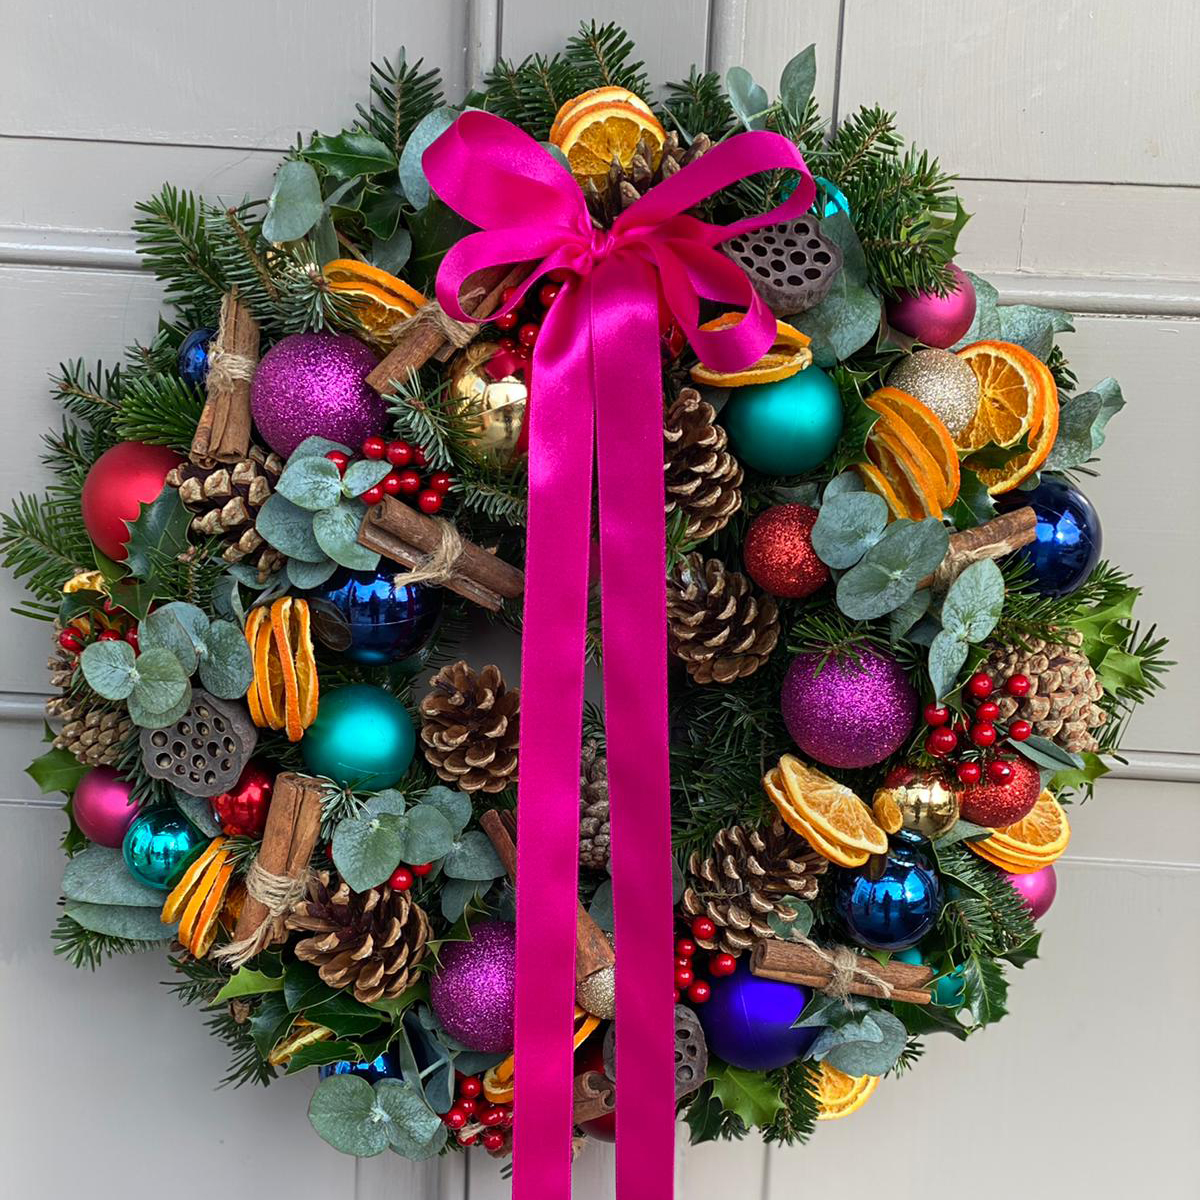 Best Christmas Wreaths - Christmas Door Wreaths